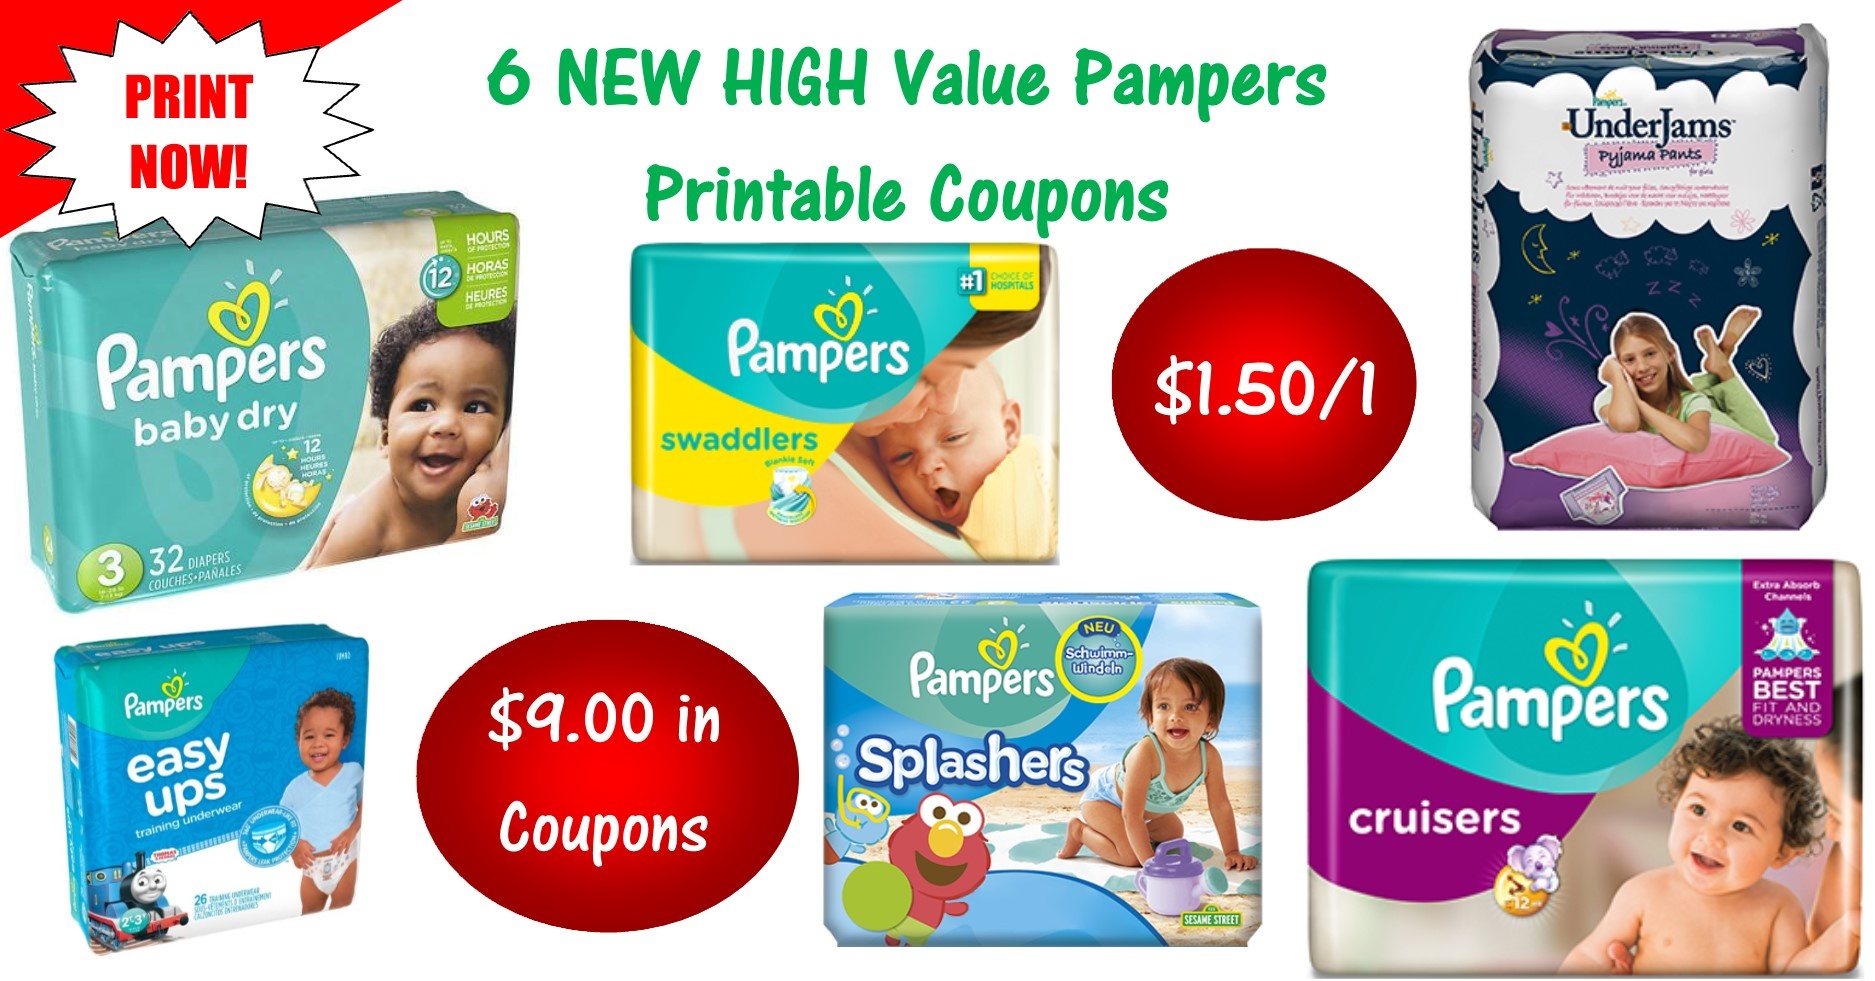 6 Pampers Printable Coupons ~ Print Now! $9 In Savings! - Free Printable Coupons For Pampers Pull Ups